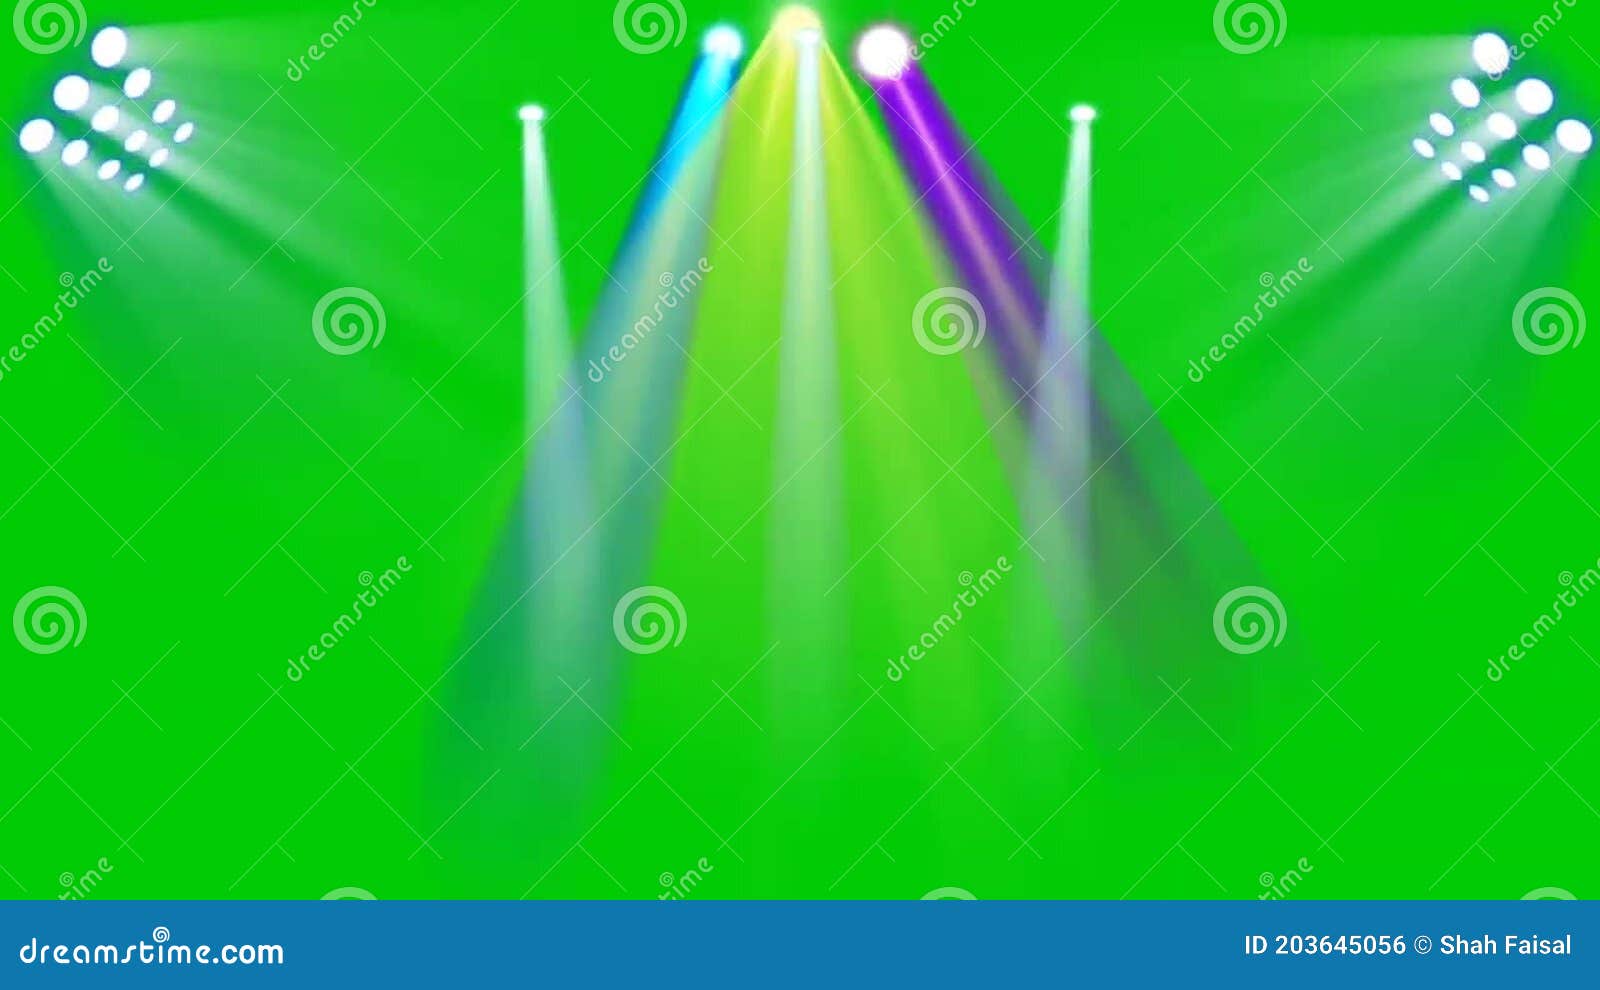 Savant Hjemland Leonardoda Disco Lights on Green Screen Stock Footage - Video of blue, club: 203645056